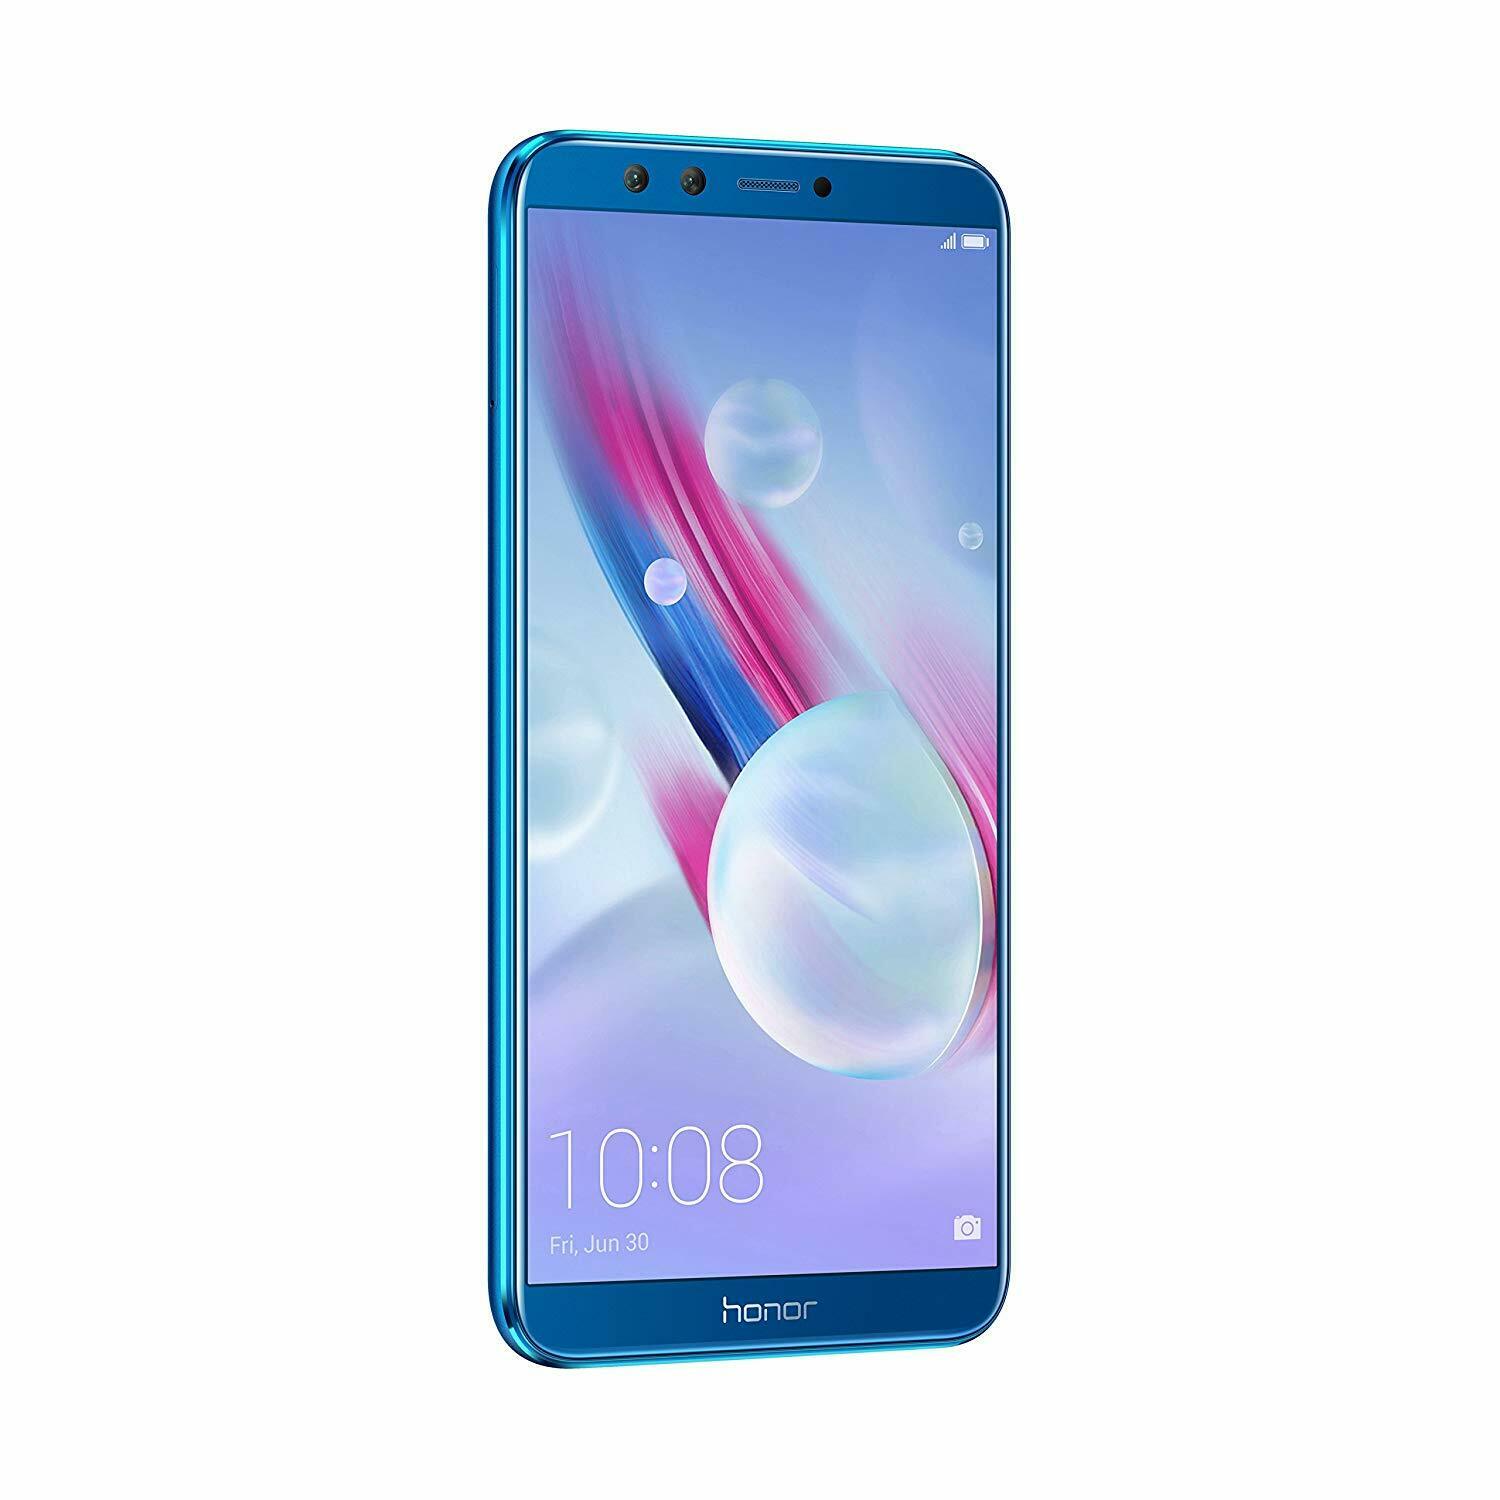 Huawei Honor 9 Lite Smartphone 5.65" Sim-Free Unlocked 32GB Smartphone Blue/Grey